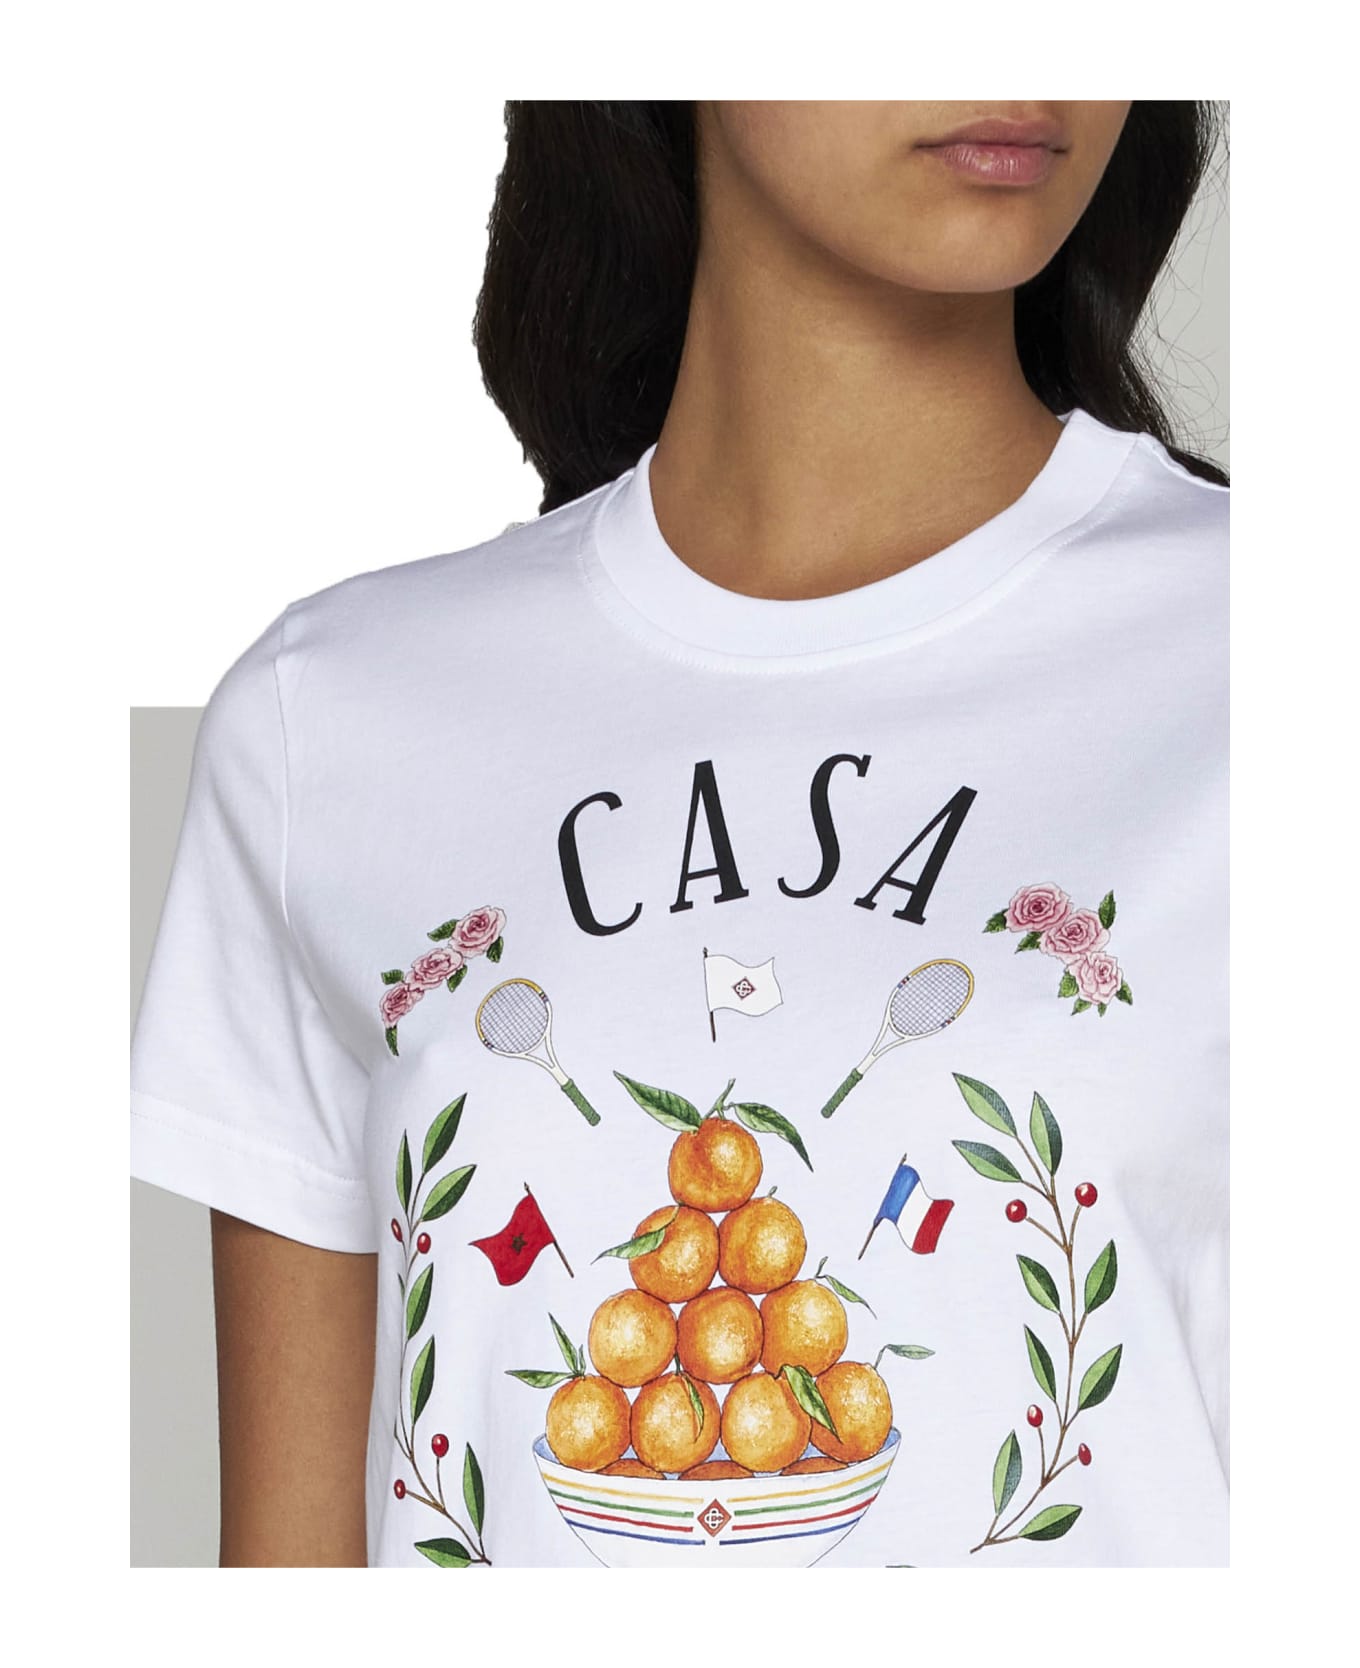 Casablanca T-Shirt - Casa way